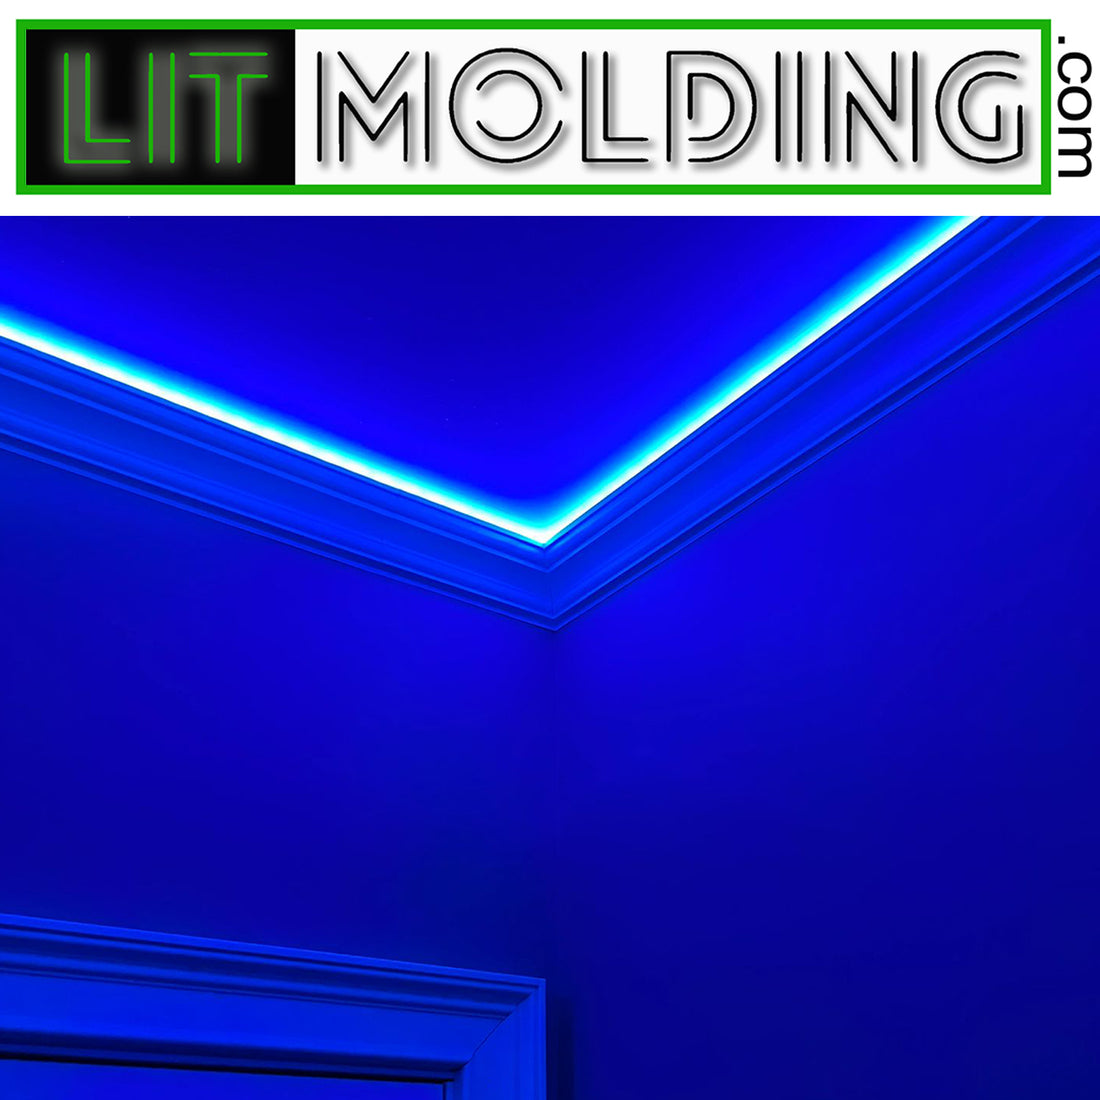 LitMolding